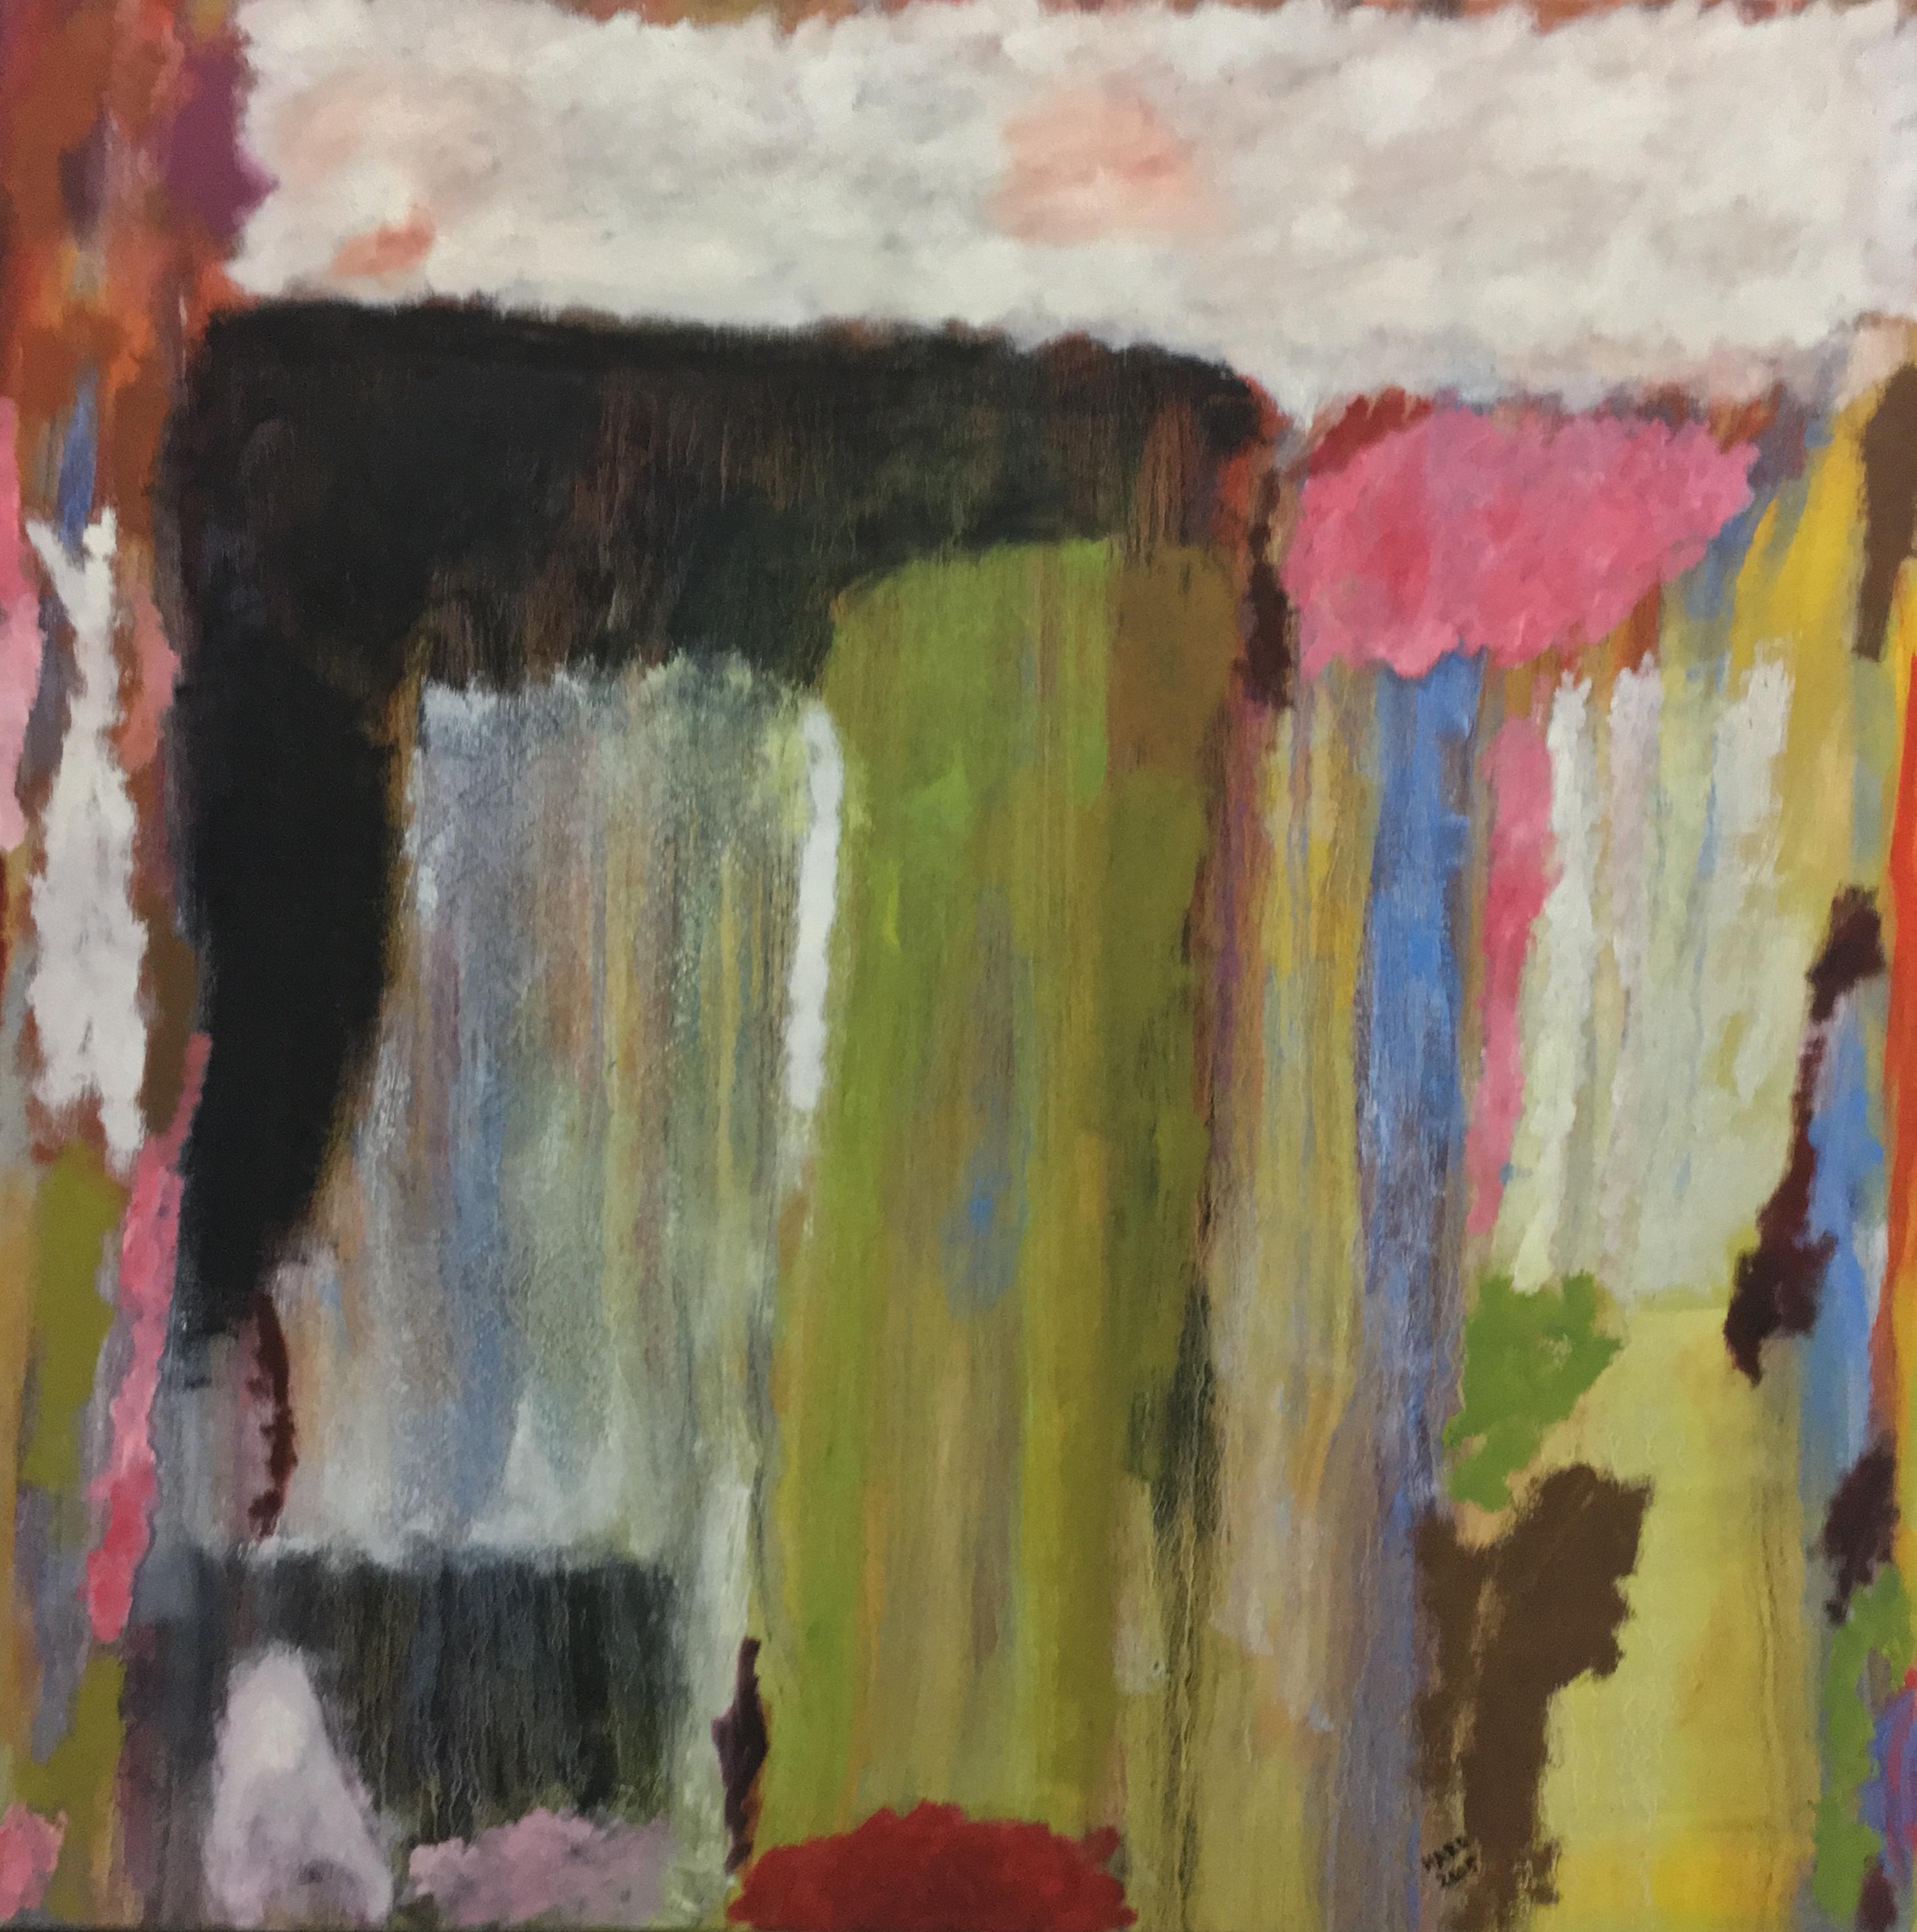 John Haro Figurative Painting - "Abstract Drip"